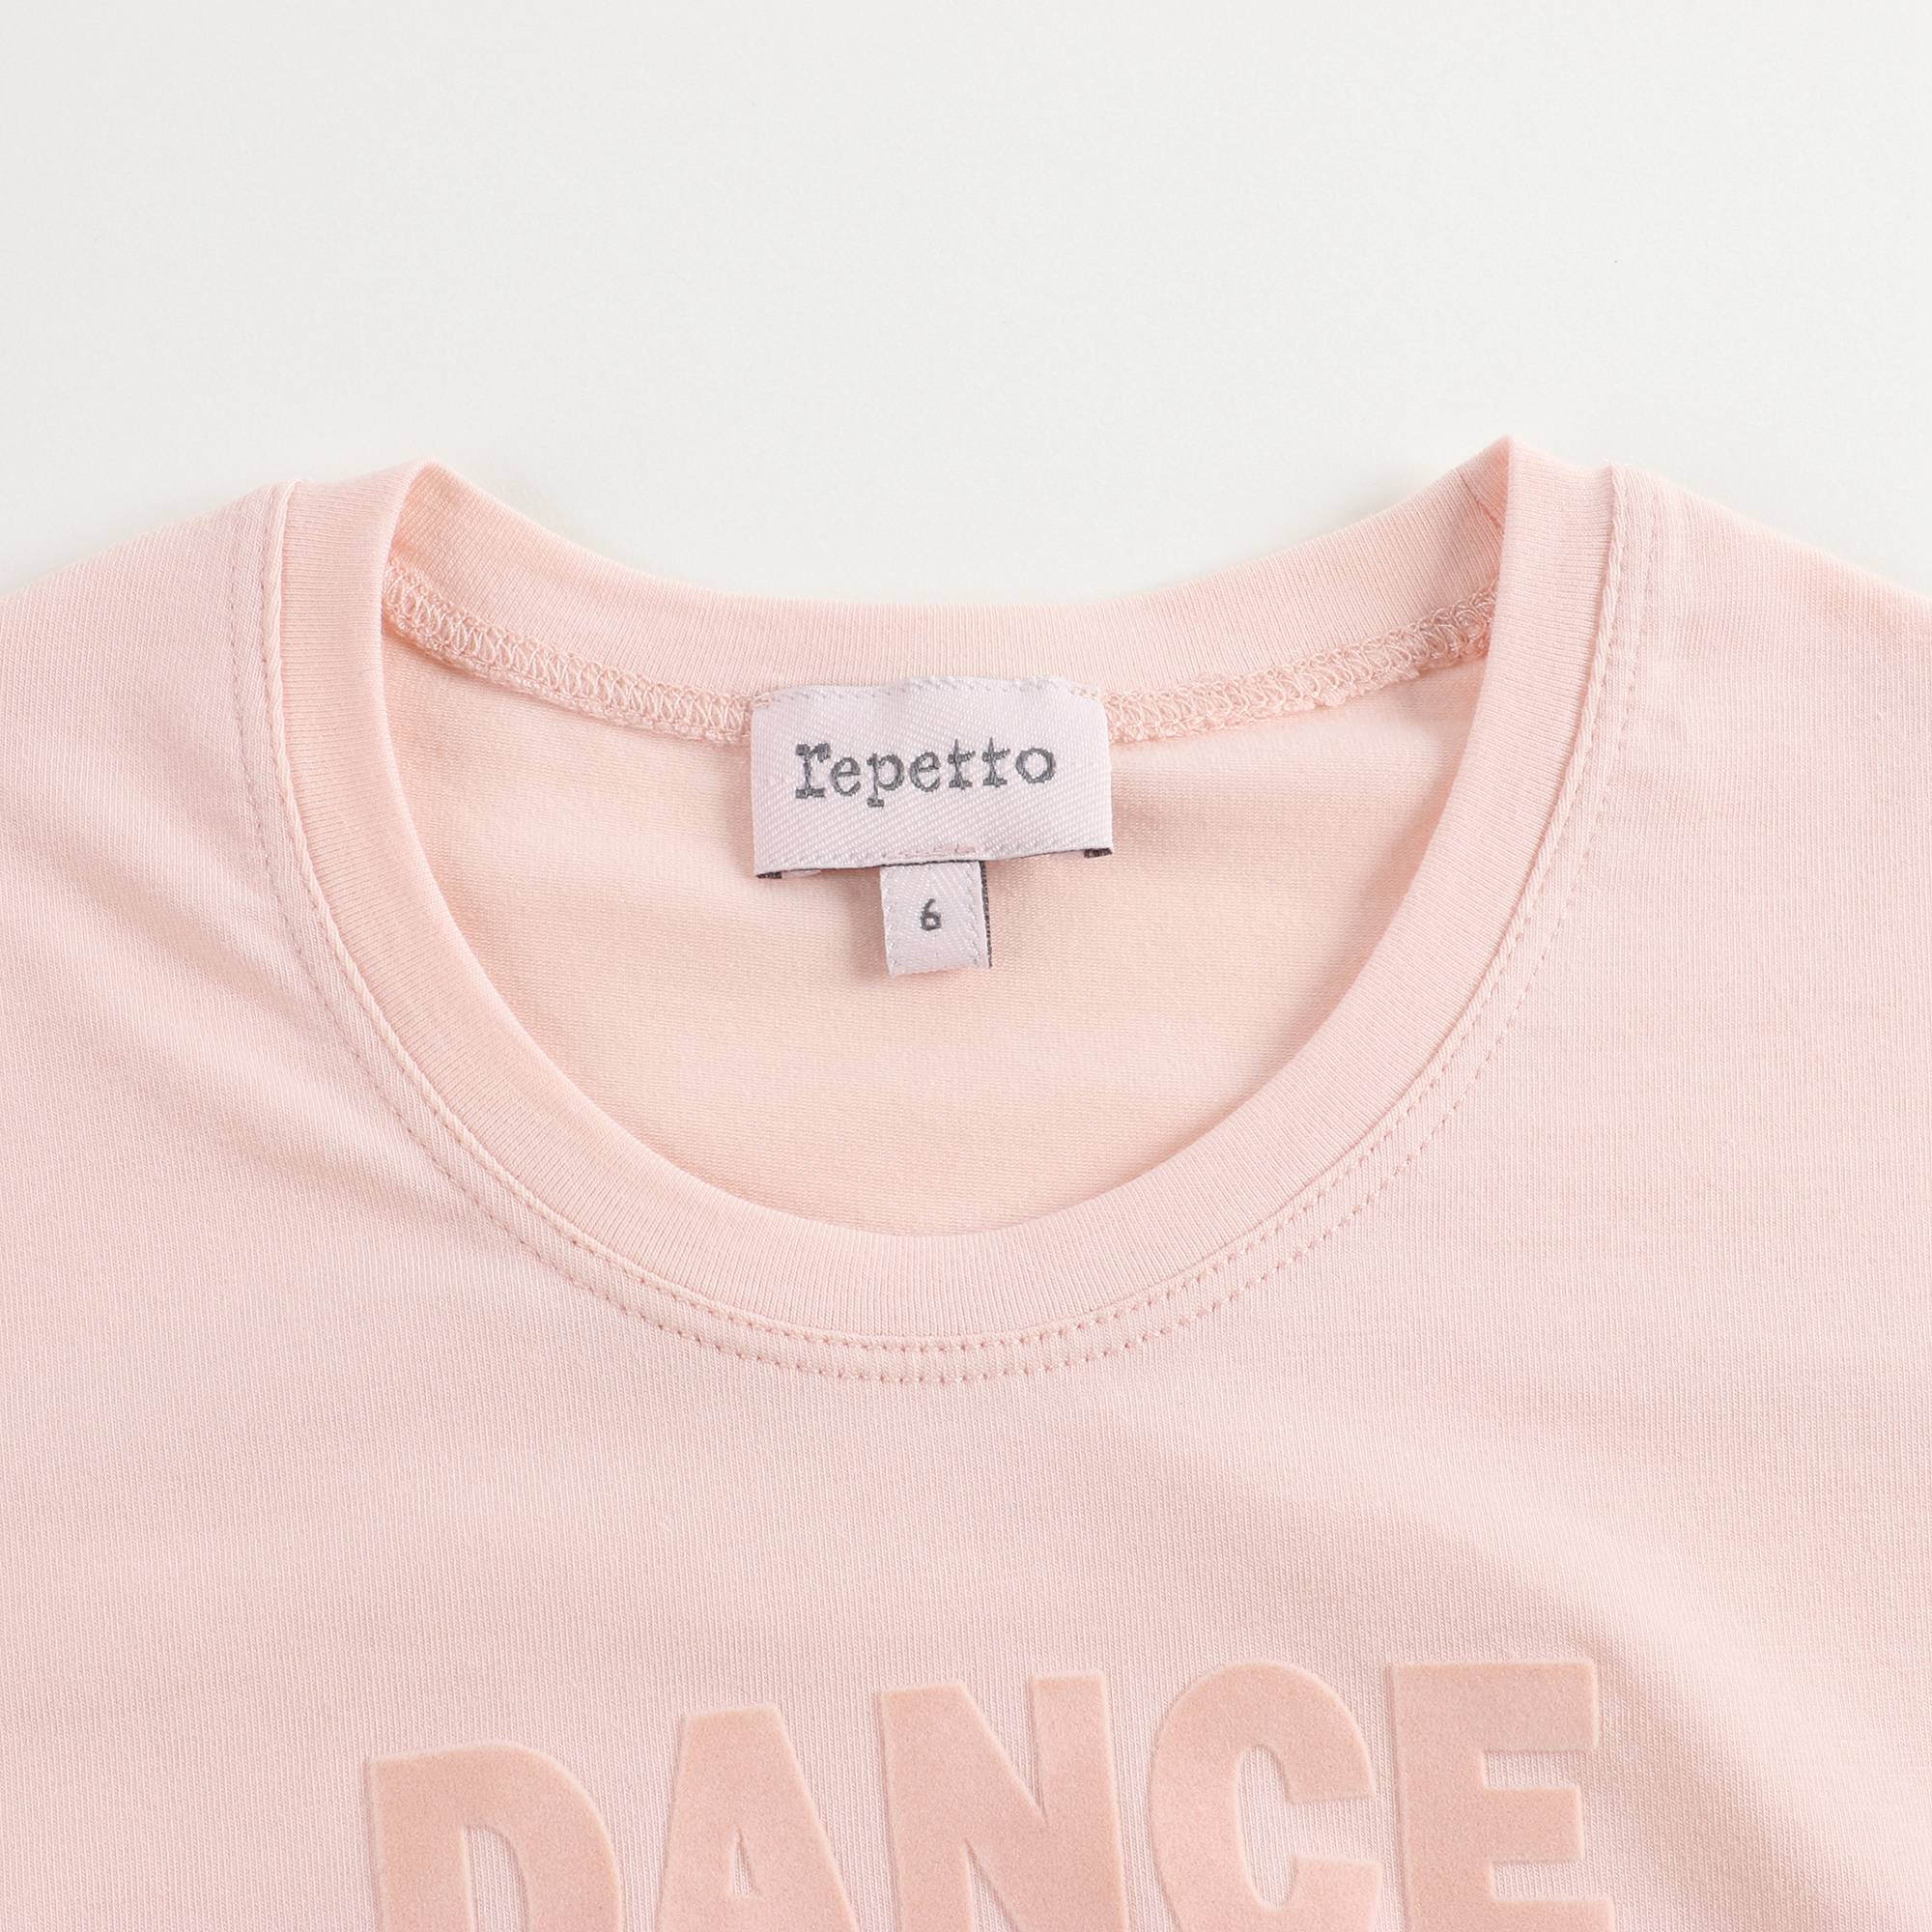 Girls Pink Cotton T-shirt